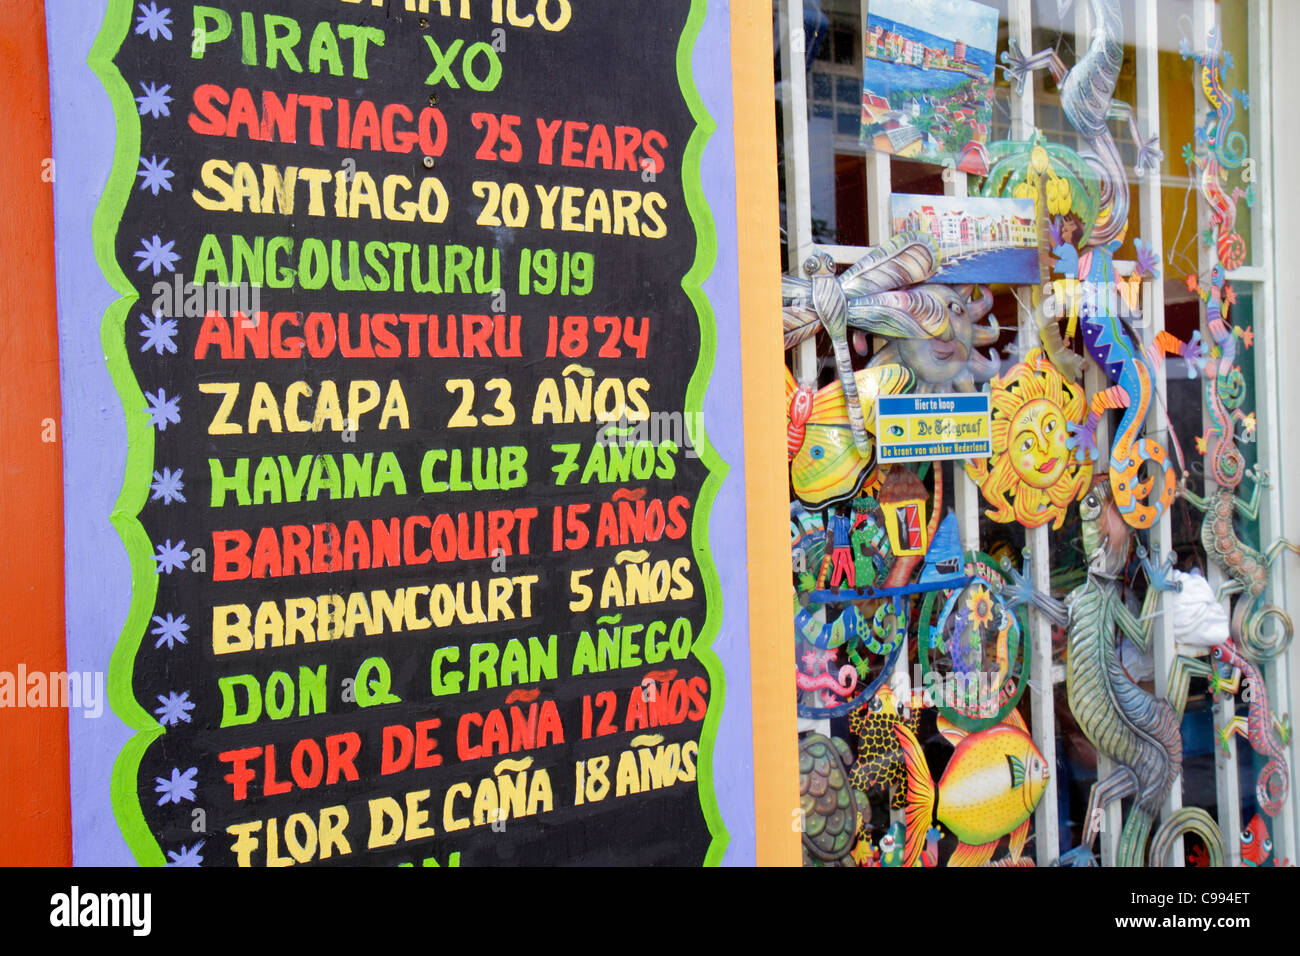 Willemstad Curaçao,Netherlands Lesser Leeward Antilles,ABC Islands,Punda,Columbusstraat,gift shop,souvenir,rum menu,Don Q,Flor de Cana,Barbancourt,liq Stock Photo